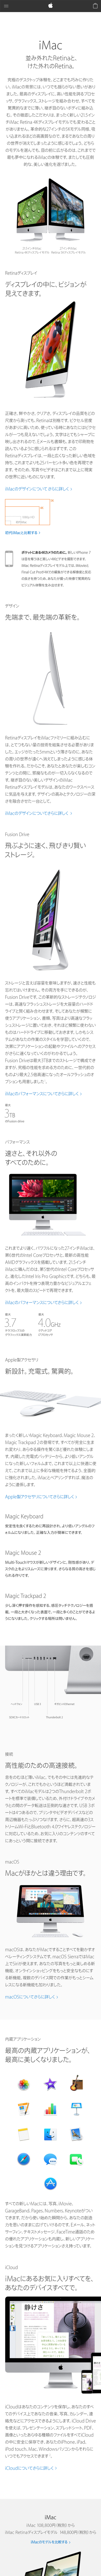 iMac_sp_1